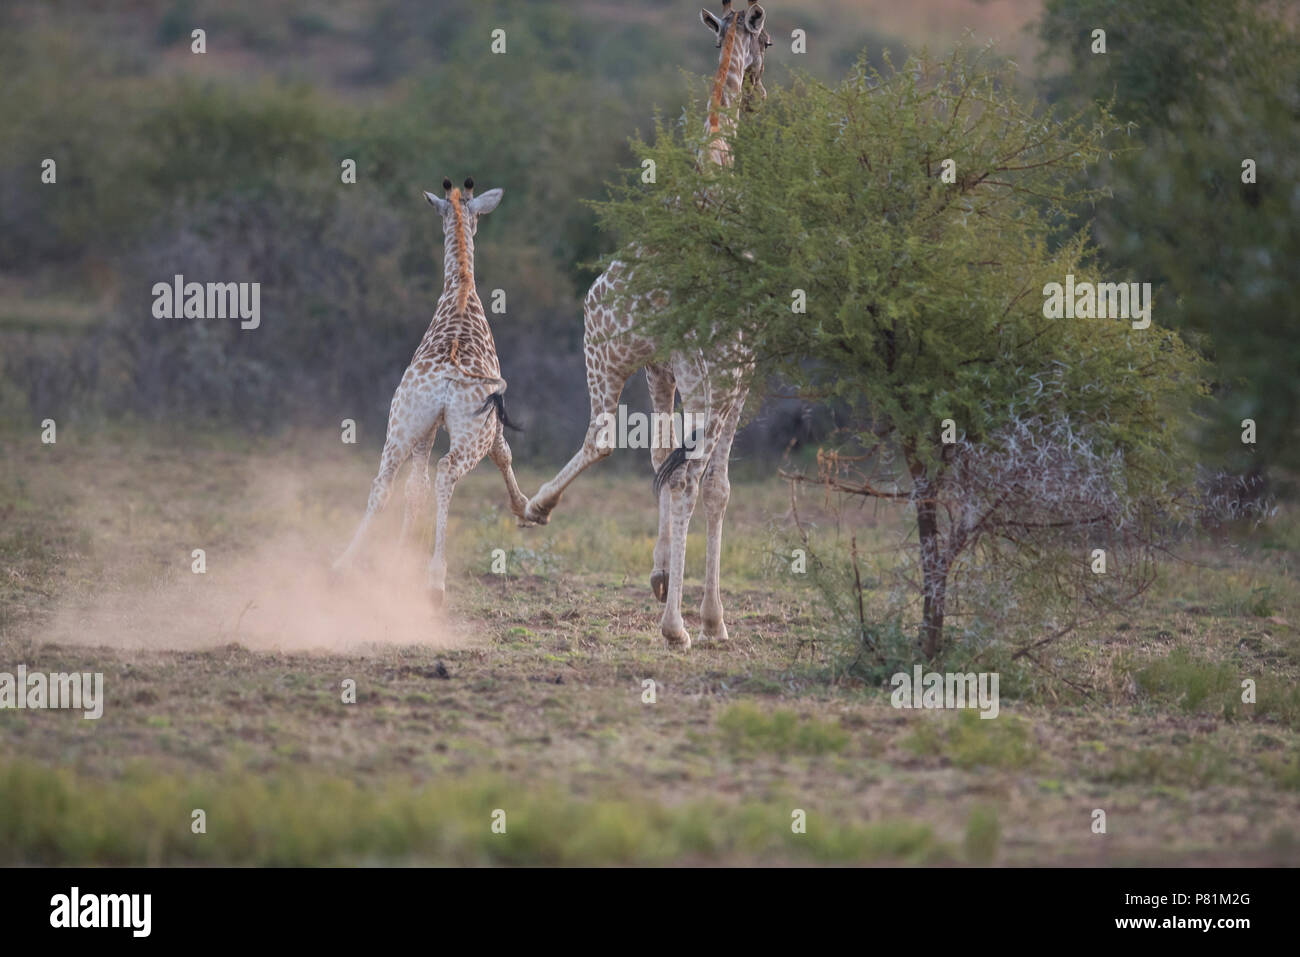 Wild giraffes playing fighting looks like high five funny animal photo Stock Photo